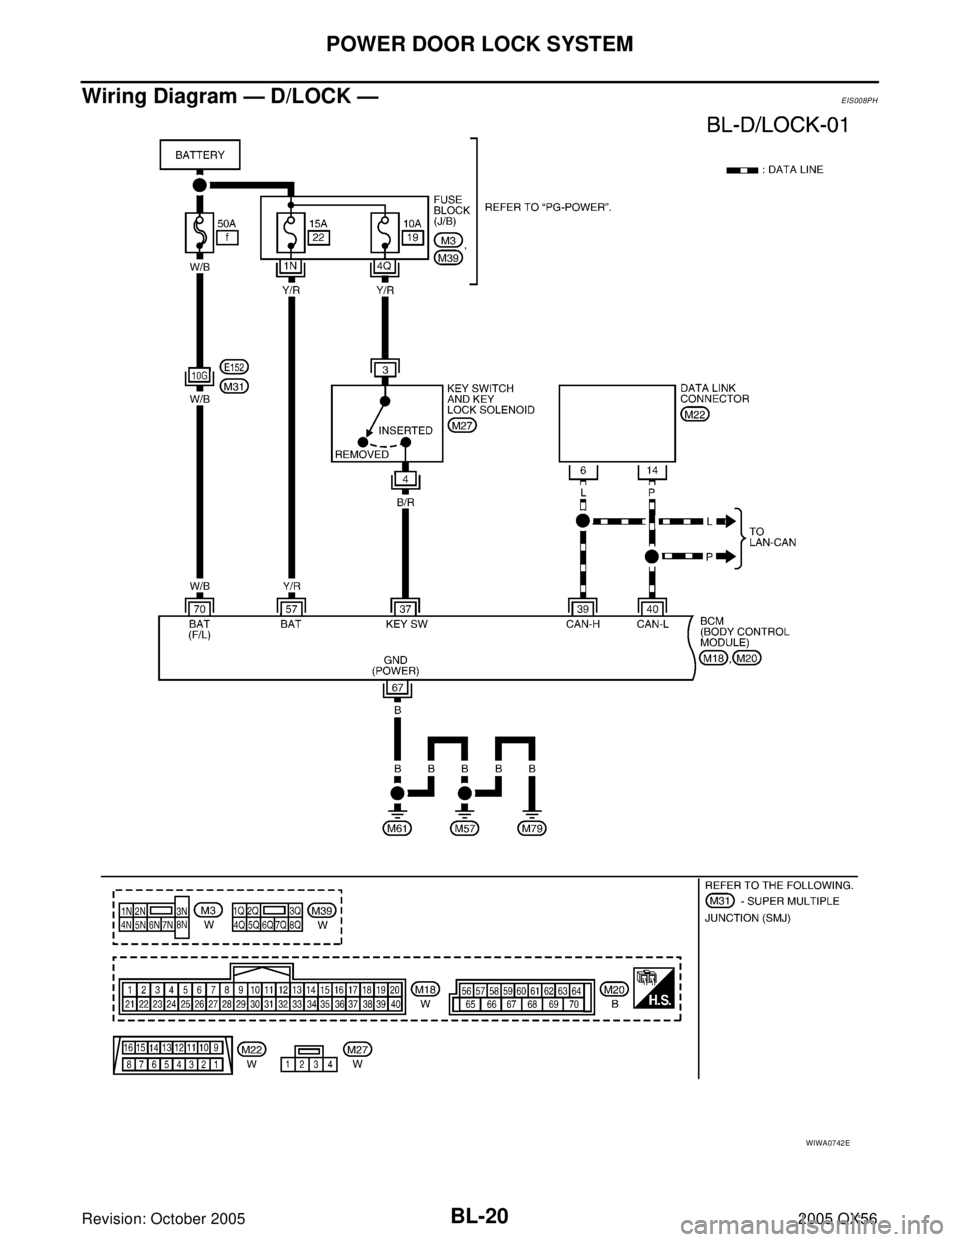 INFINITI QX4 2005  Factory Owners Manual BL-20
POWER DOOR LOCK SYSTEM
Revision: October 20052005 QX56
Wiring Diagram — D/LOCK —EIS008PH
WIWA0742E 